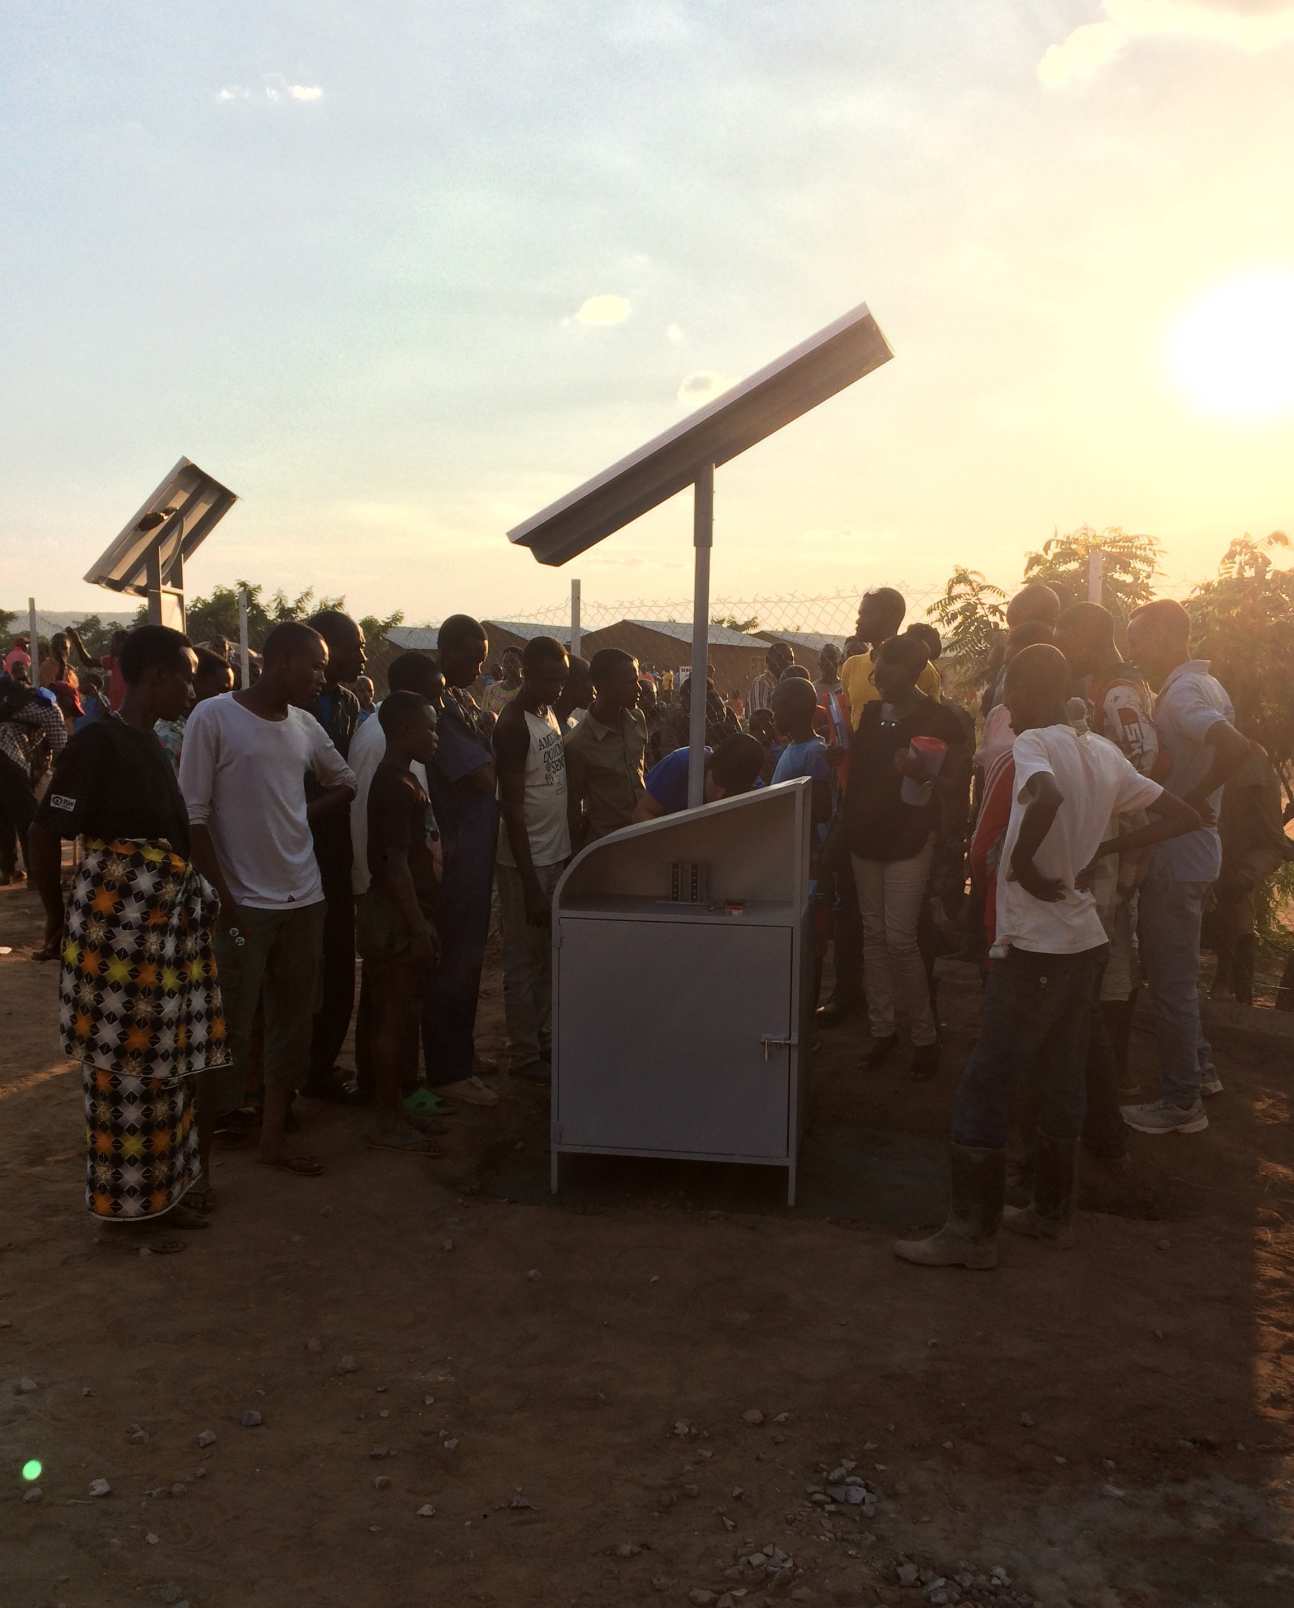 Solar service in Rwandan camp